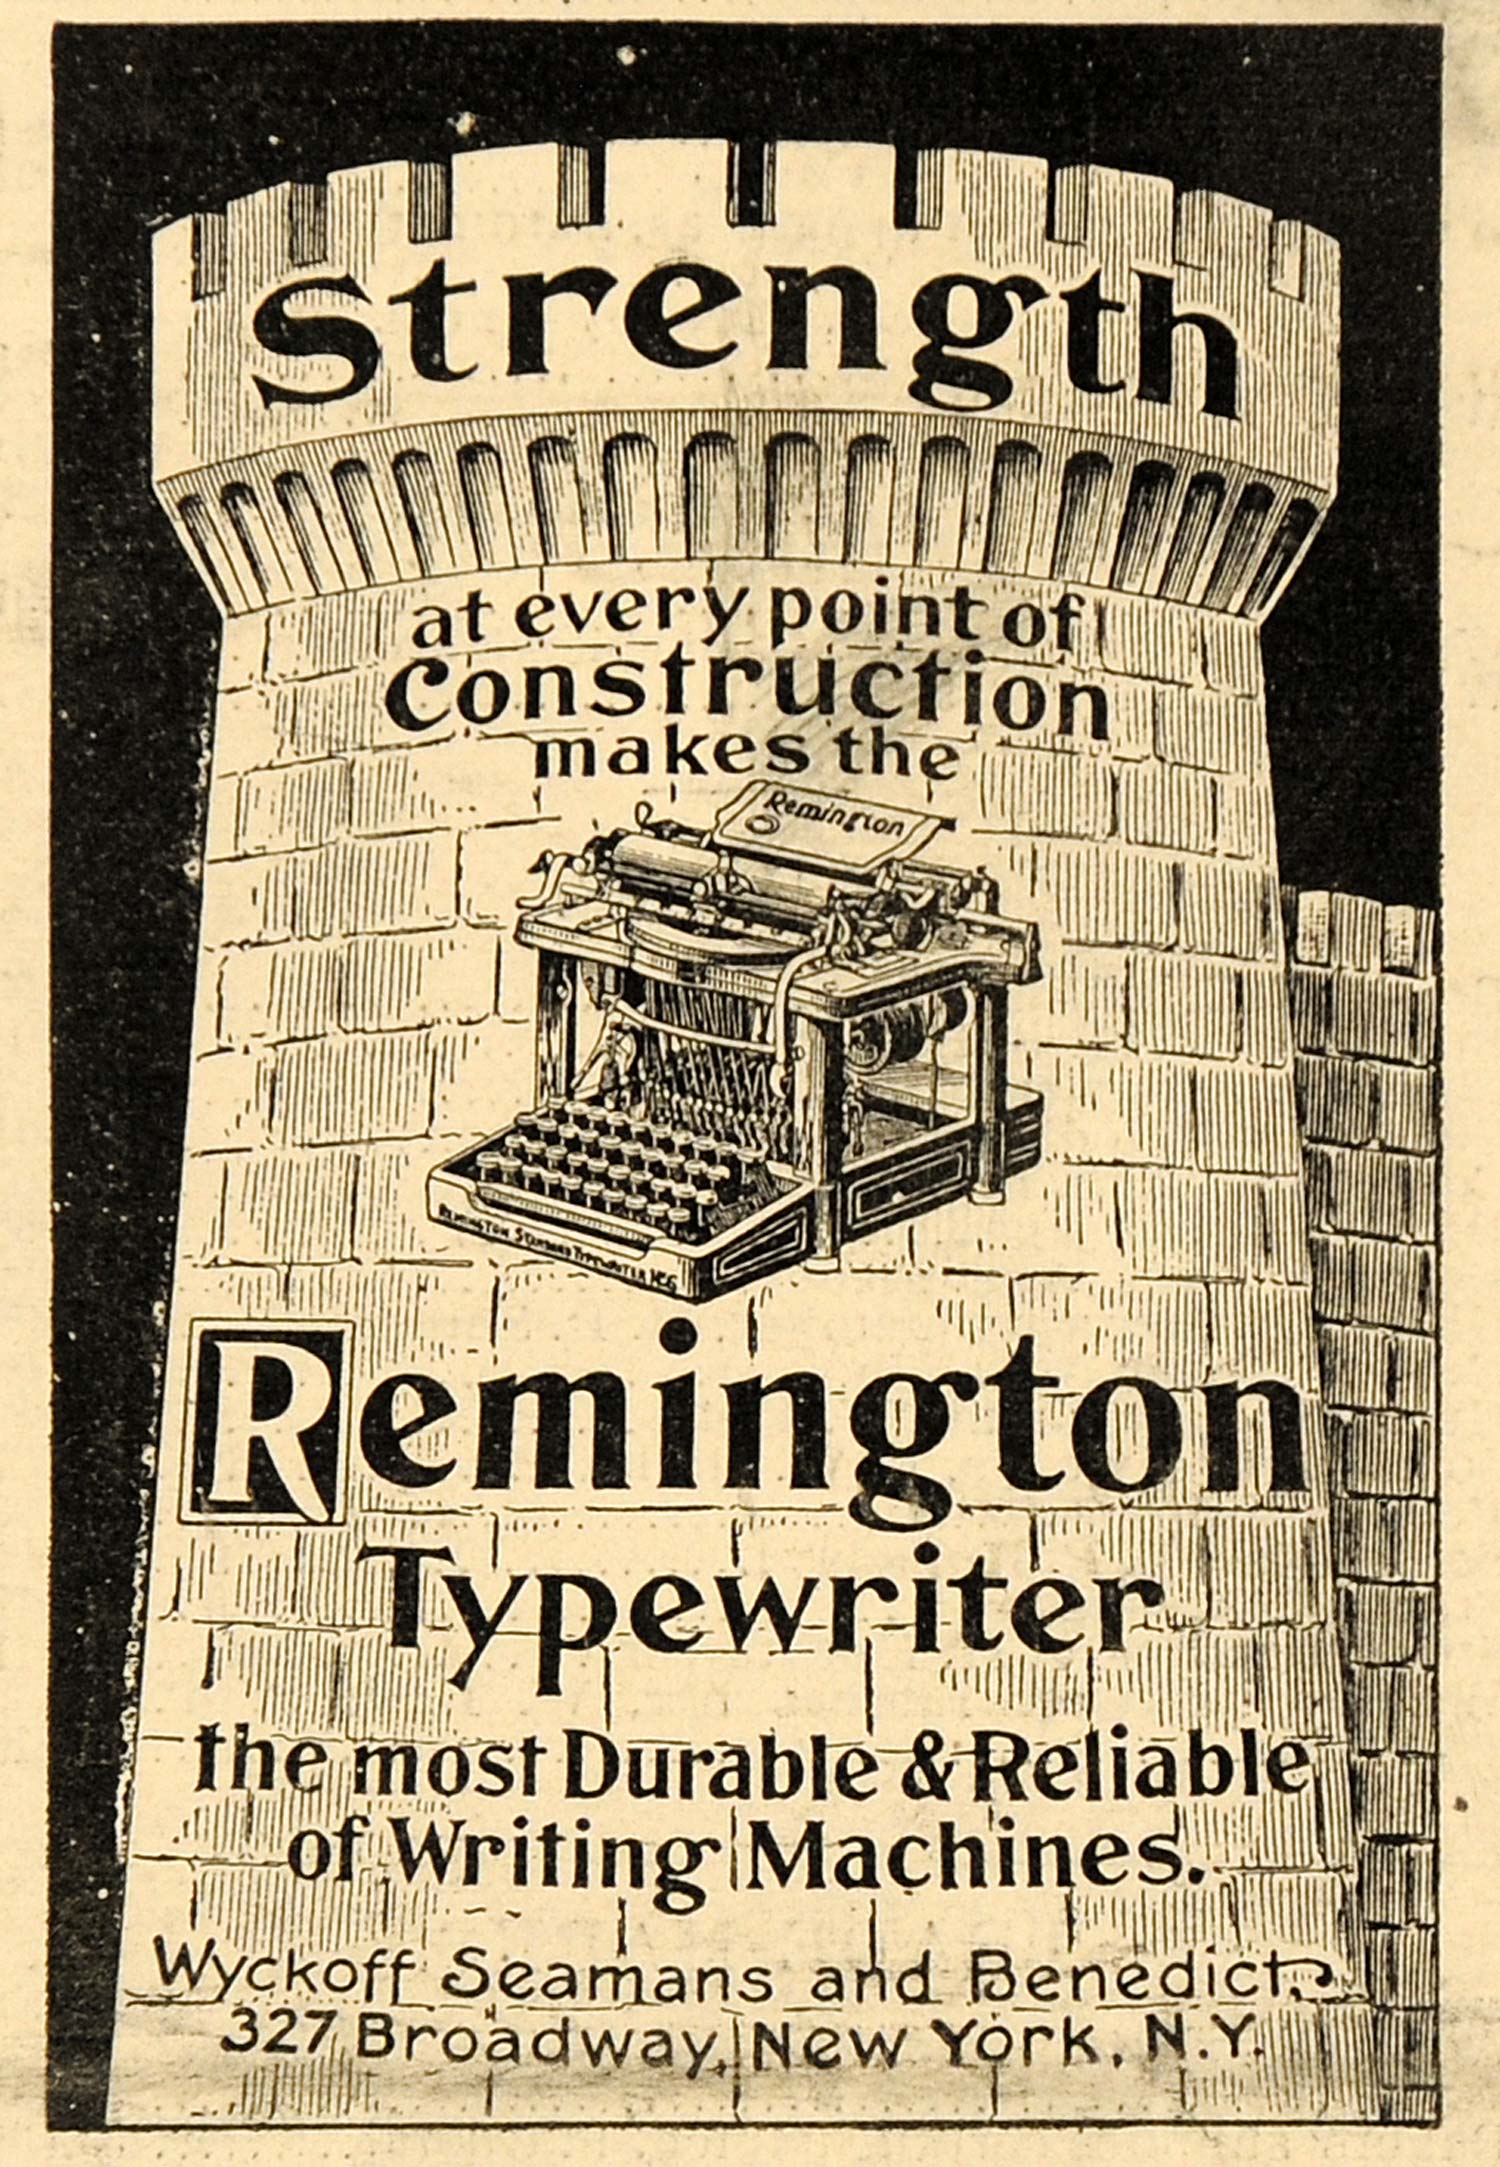 1899 Ad Wyckoff Seamans & Benedict Typewriter Castle - ORIGINAL ADVERTISING SCA2